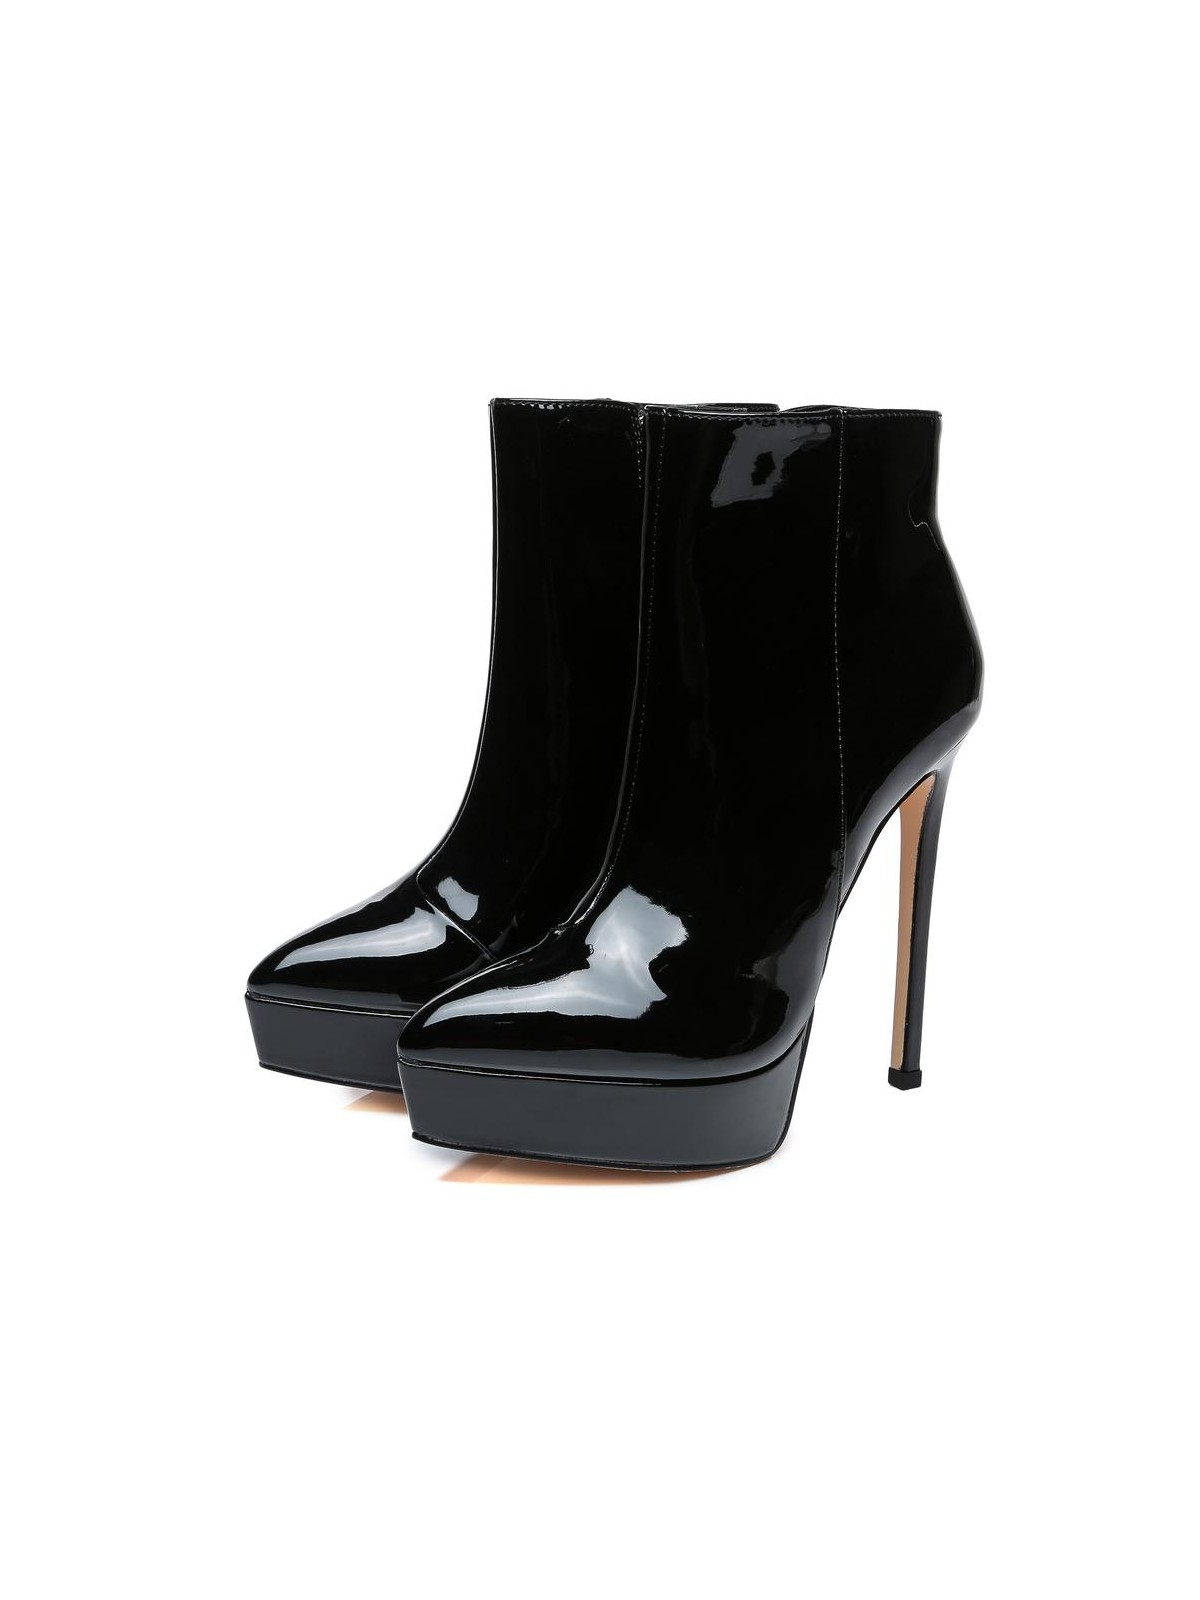 Giaro Giaro Platform ankle boots STACK in black with 14cm heels - Giaro  High Heels